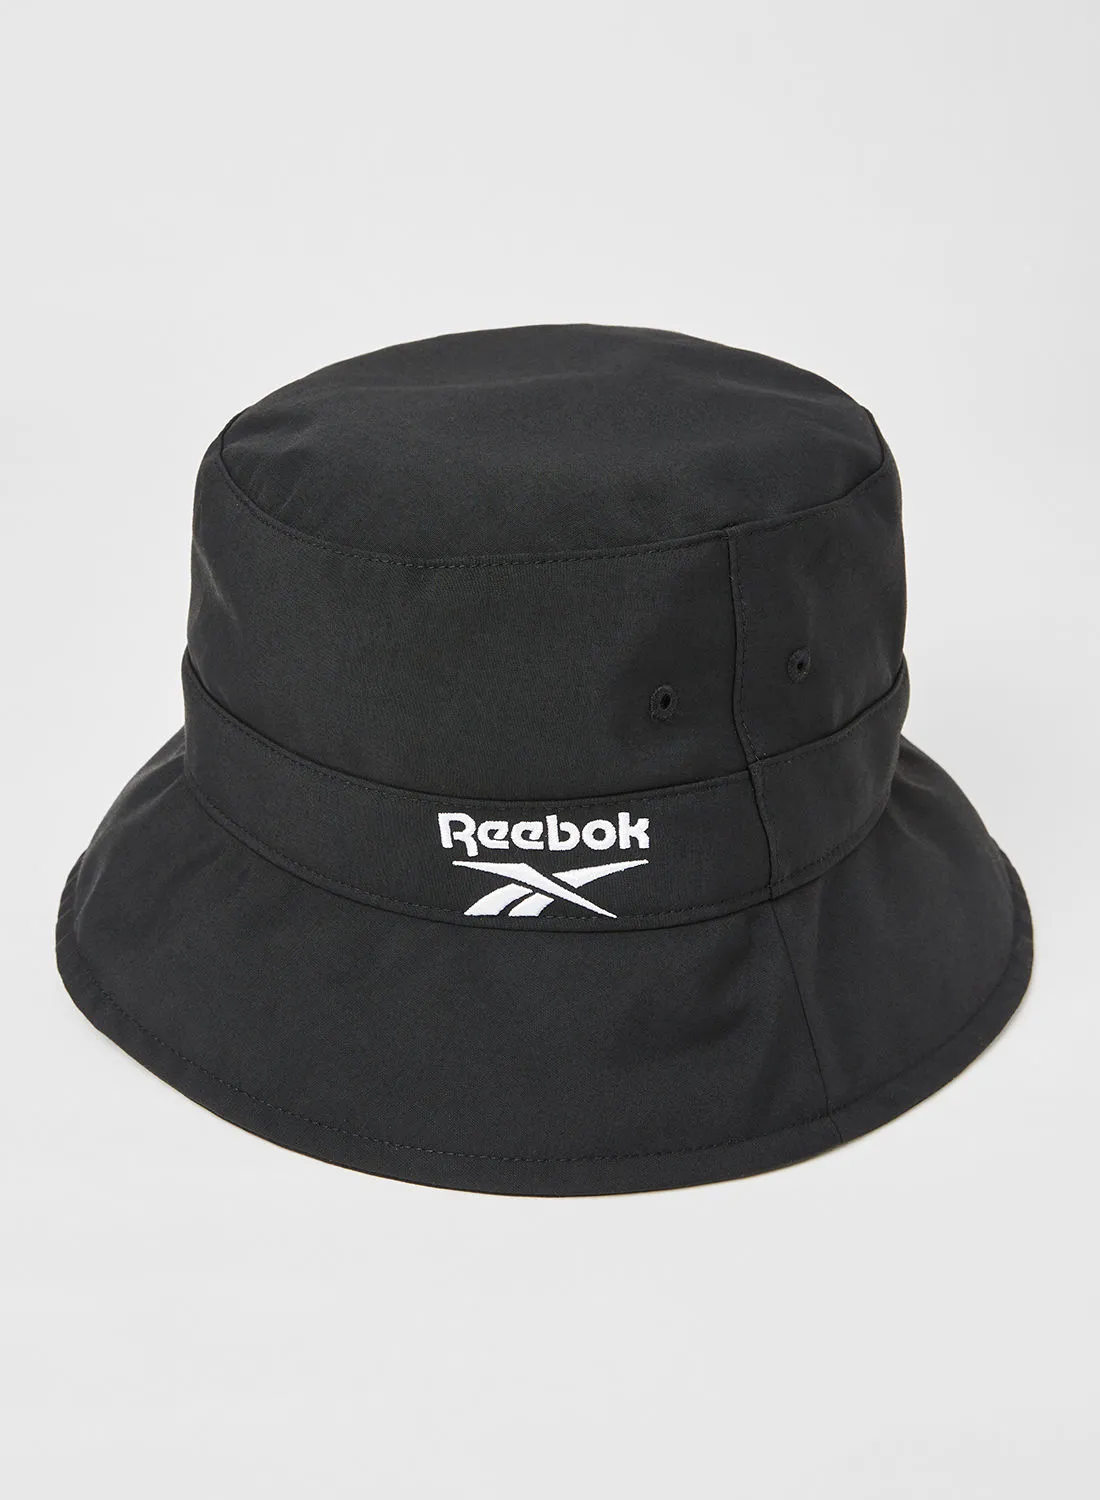 Reebok Classics Foundation Bucket Cap Black